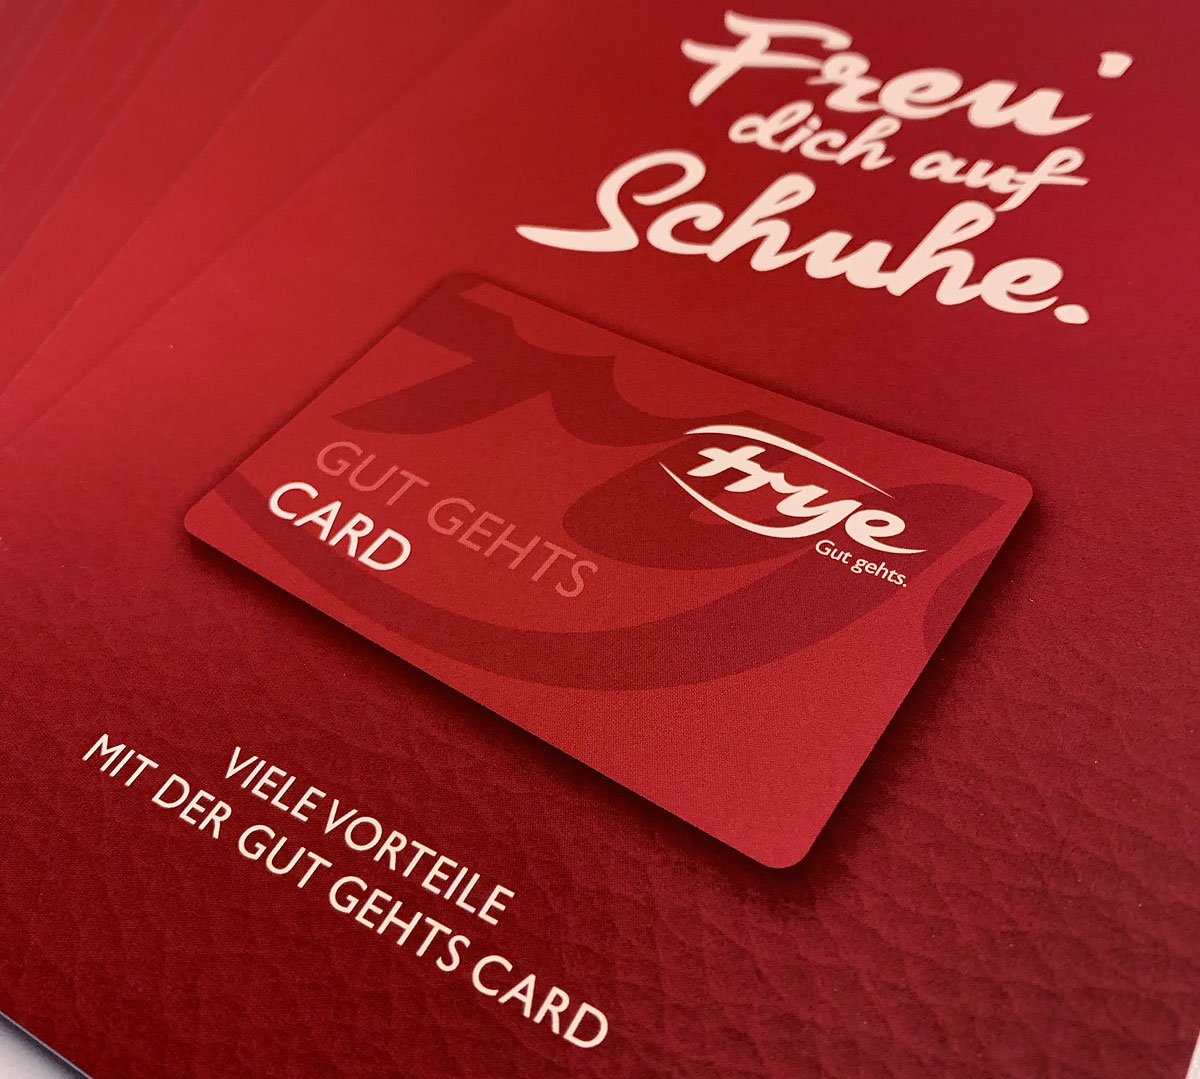 Schuhhaus Frye Kundenkarte